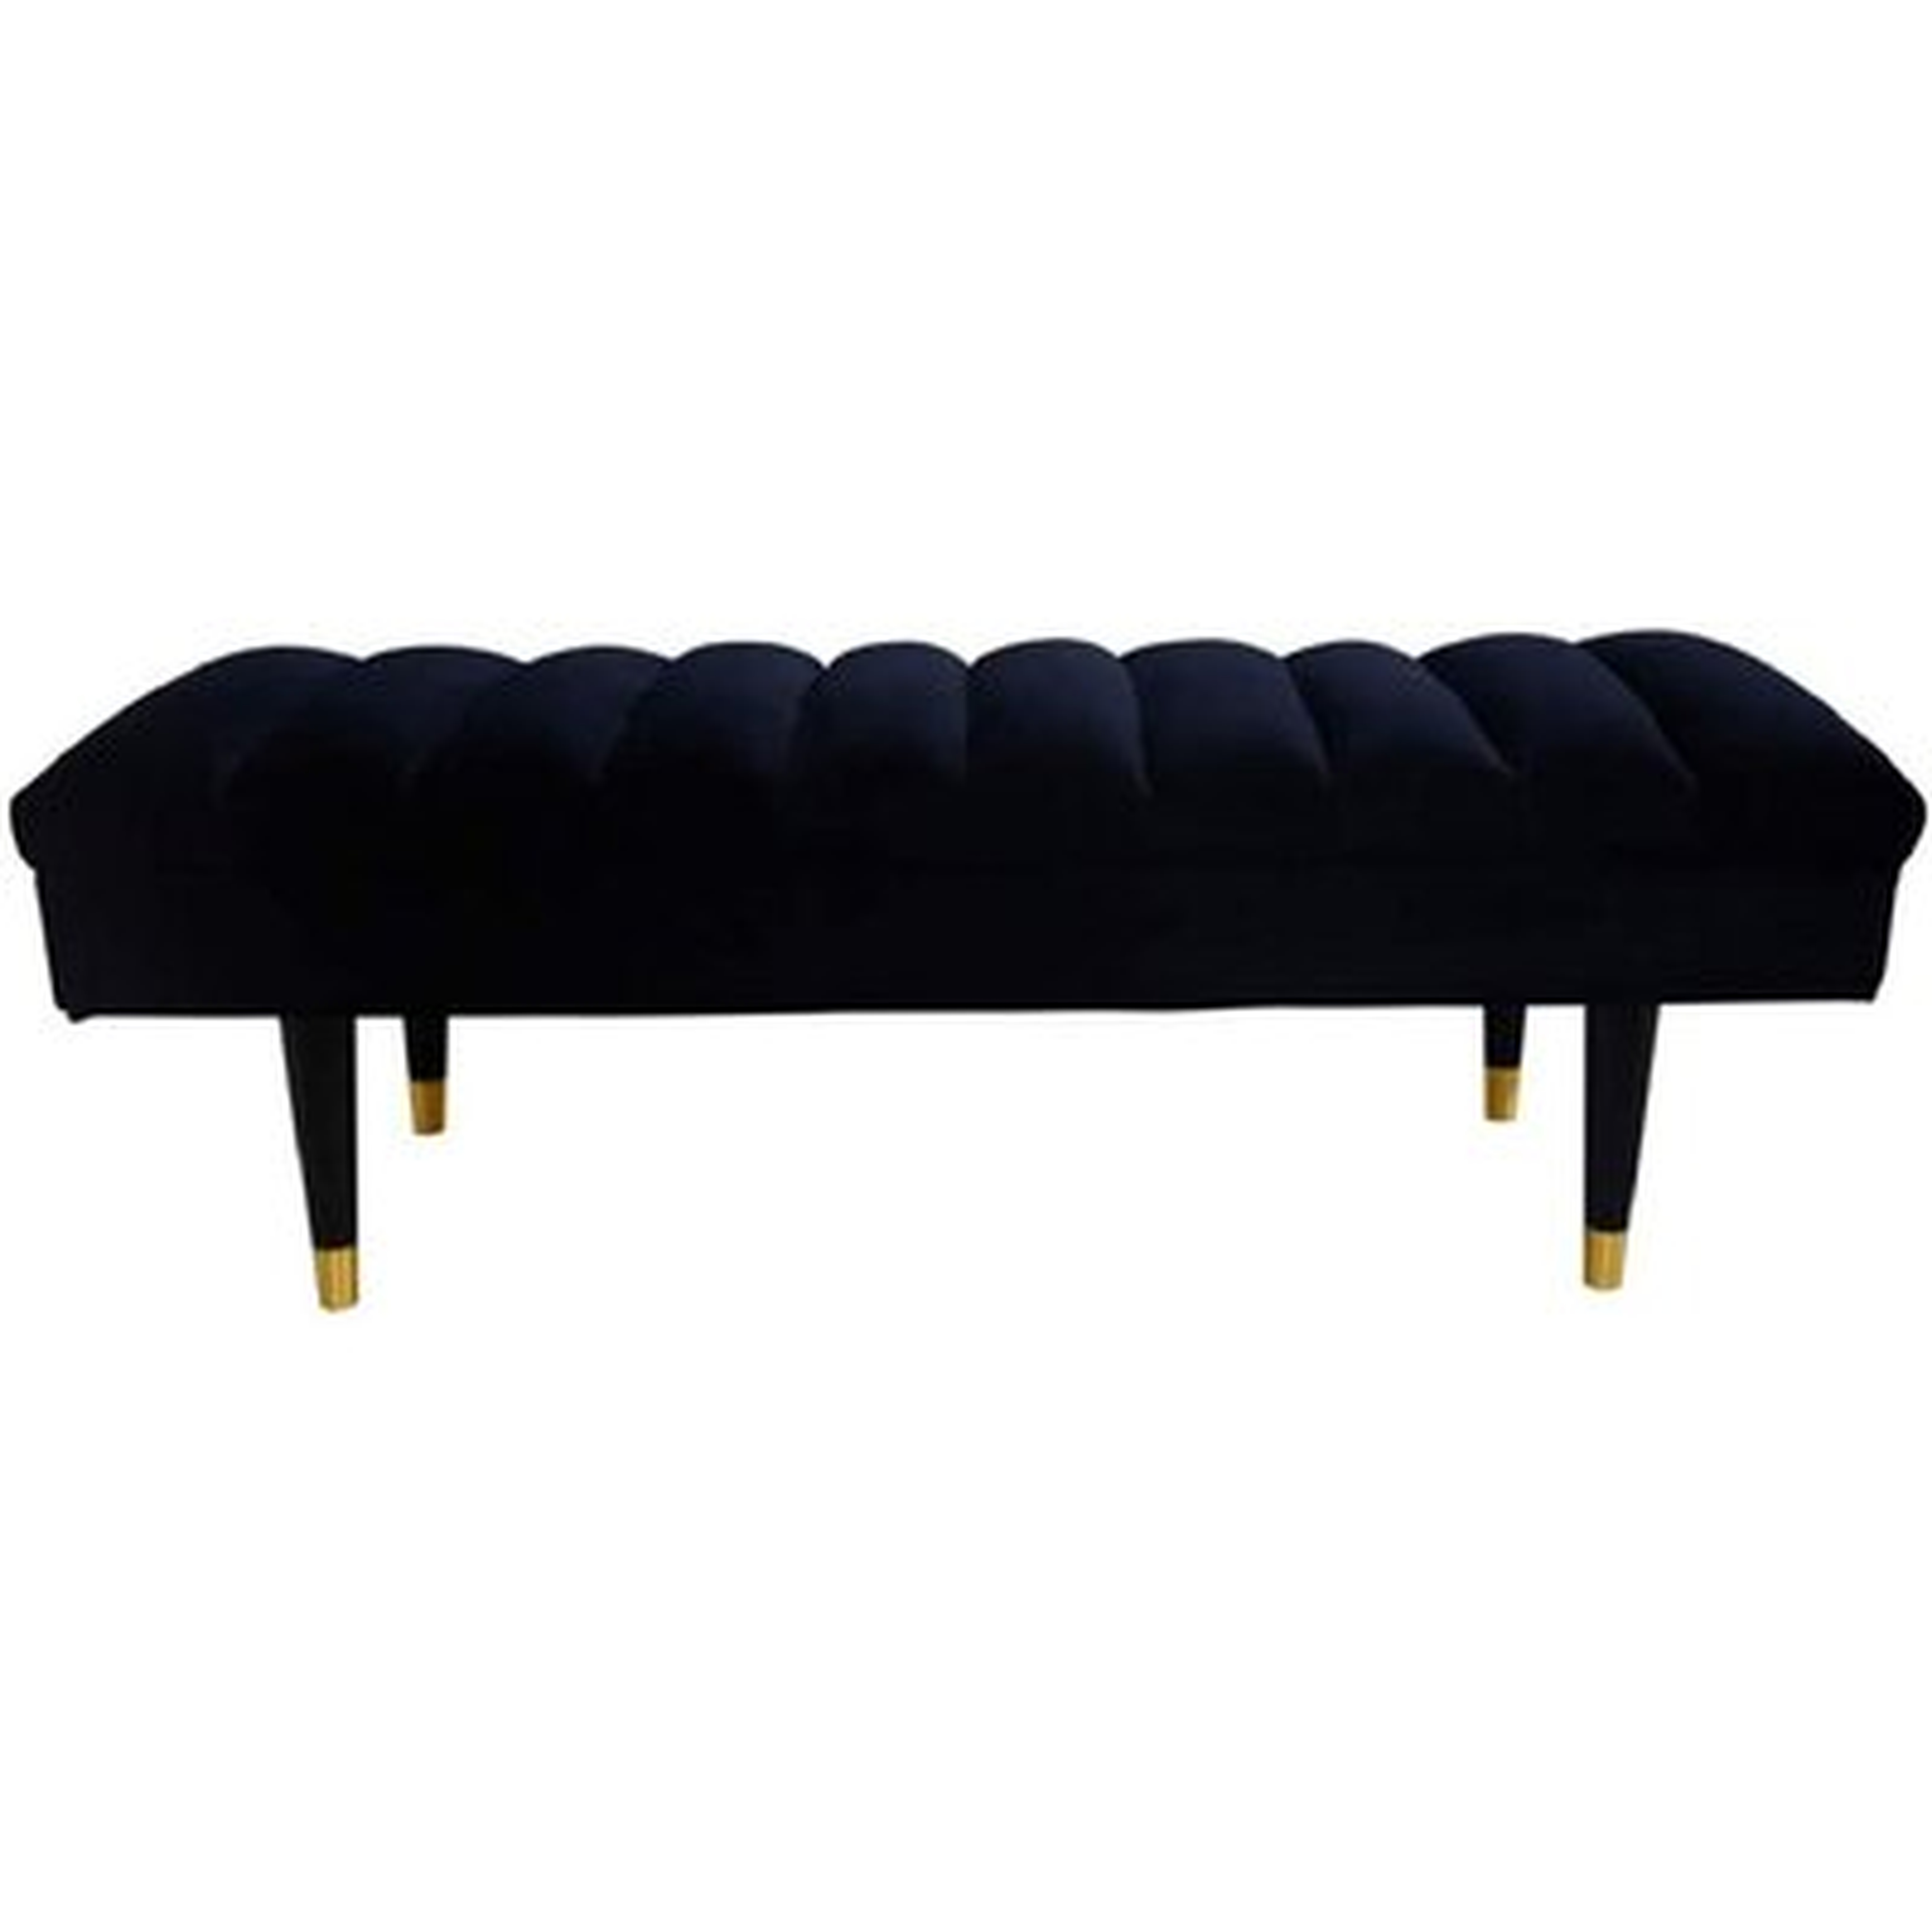 Collection Modern Style Velvet Upholstered Living Room Bench With Metal Legs Black & Gold - Wayfair